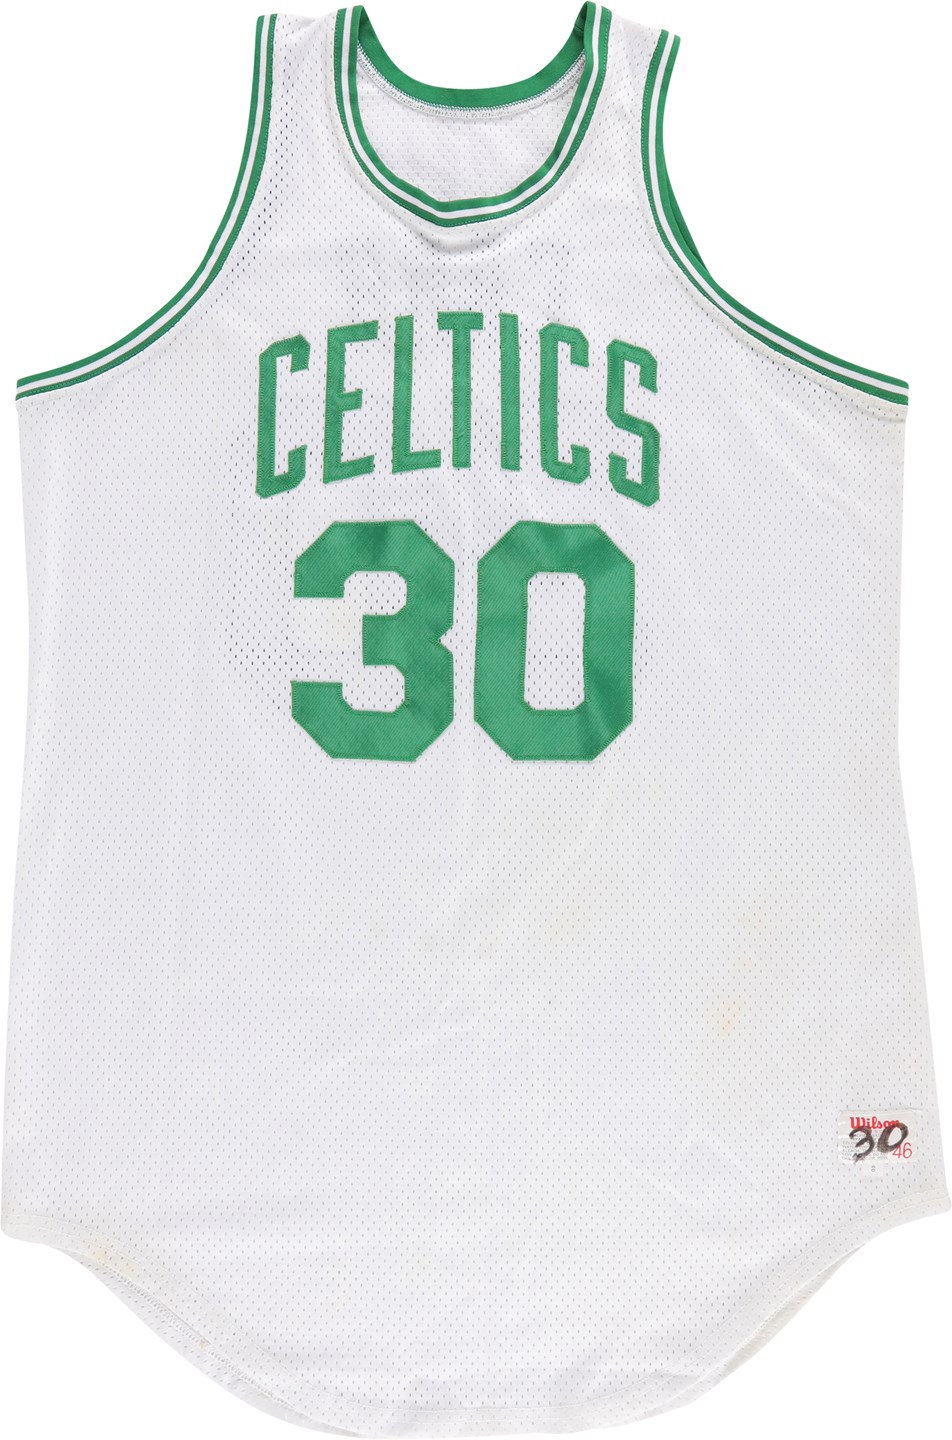 - 1985 M.L.Carr Boston Celtics Game Worn Preseason Jersey